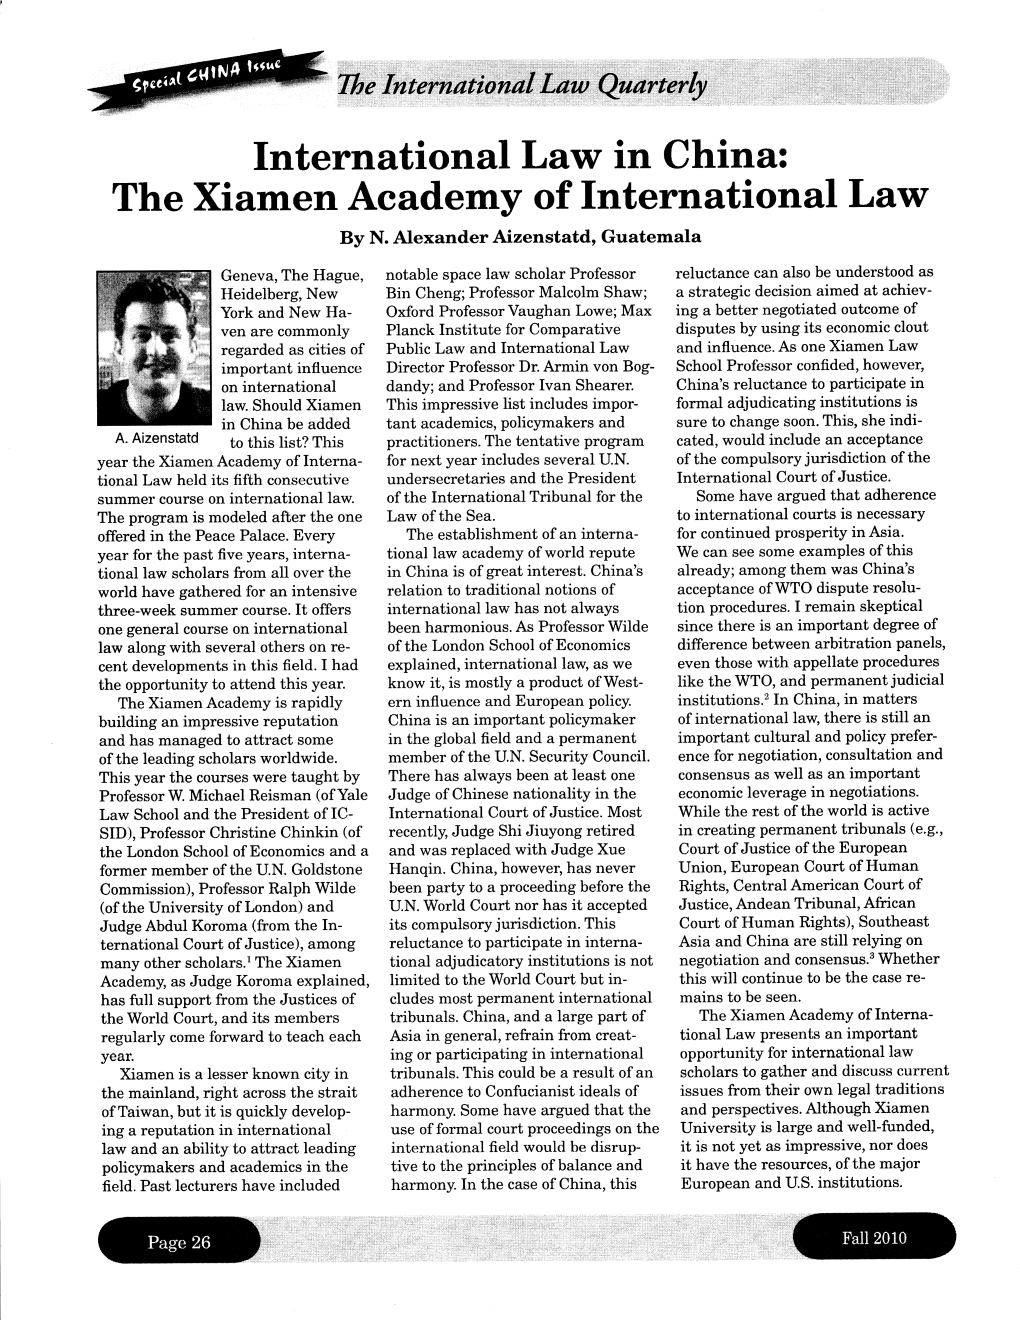 International Law in China: the Xiamen Academy of International Law by N